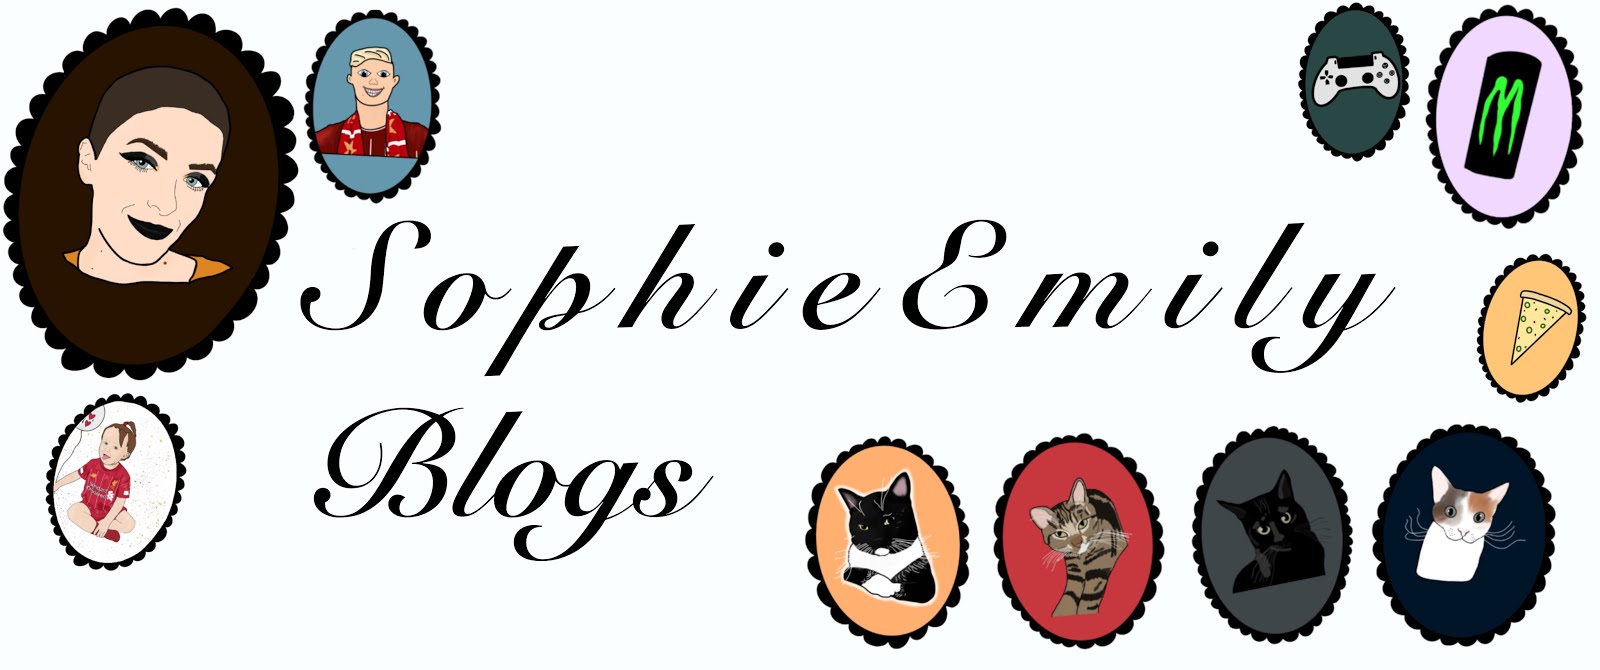 Sophie Emily Blogs